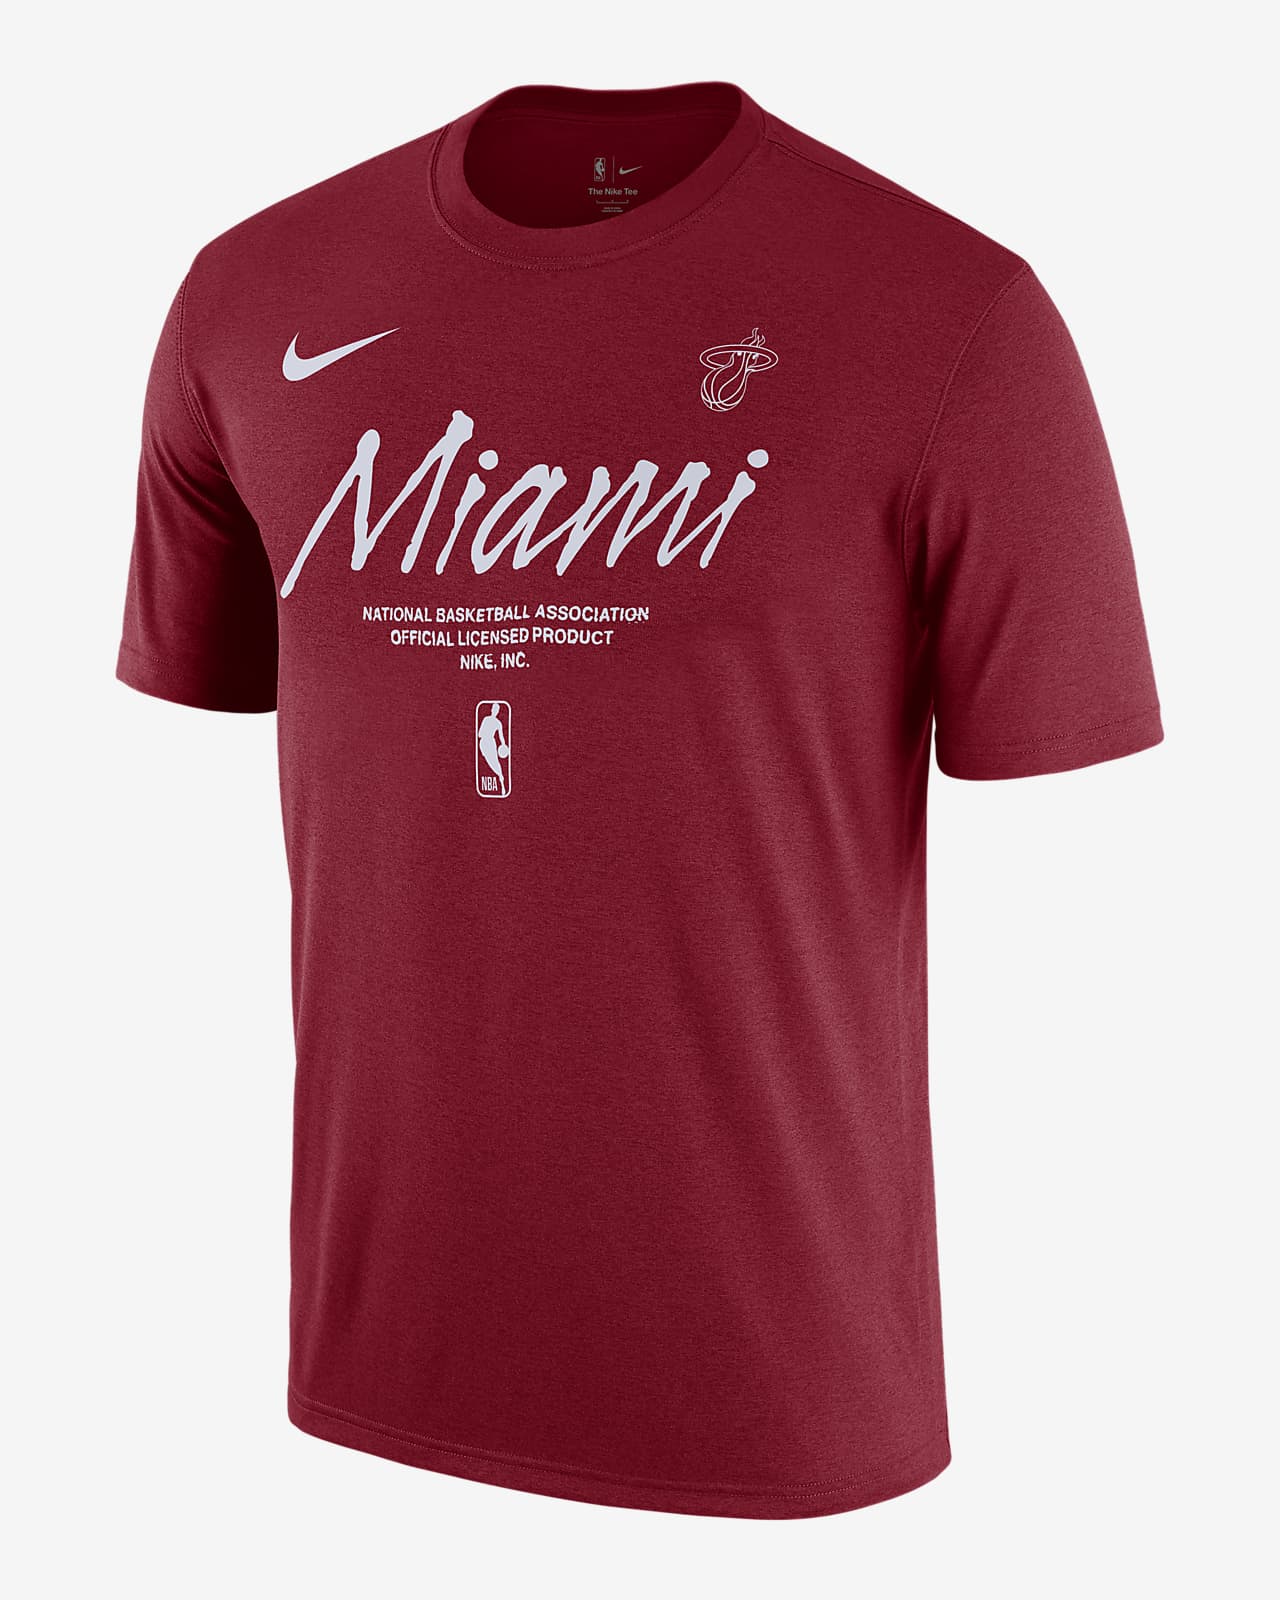 Miami Heat Pink NBA Fan Apparel & Souvenirs for sale